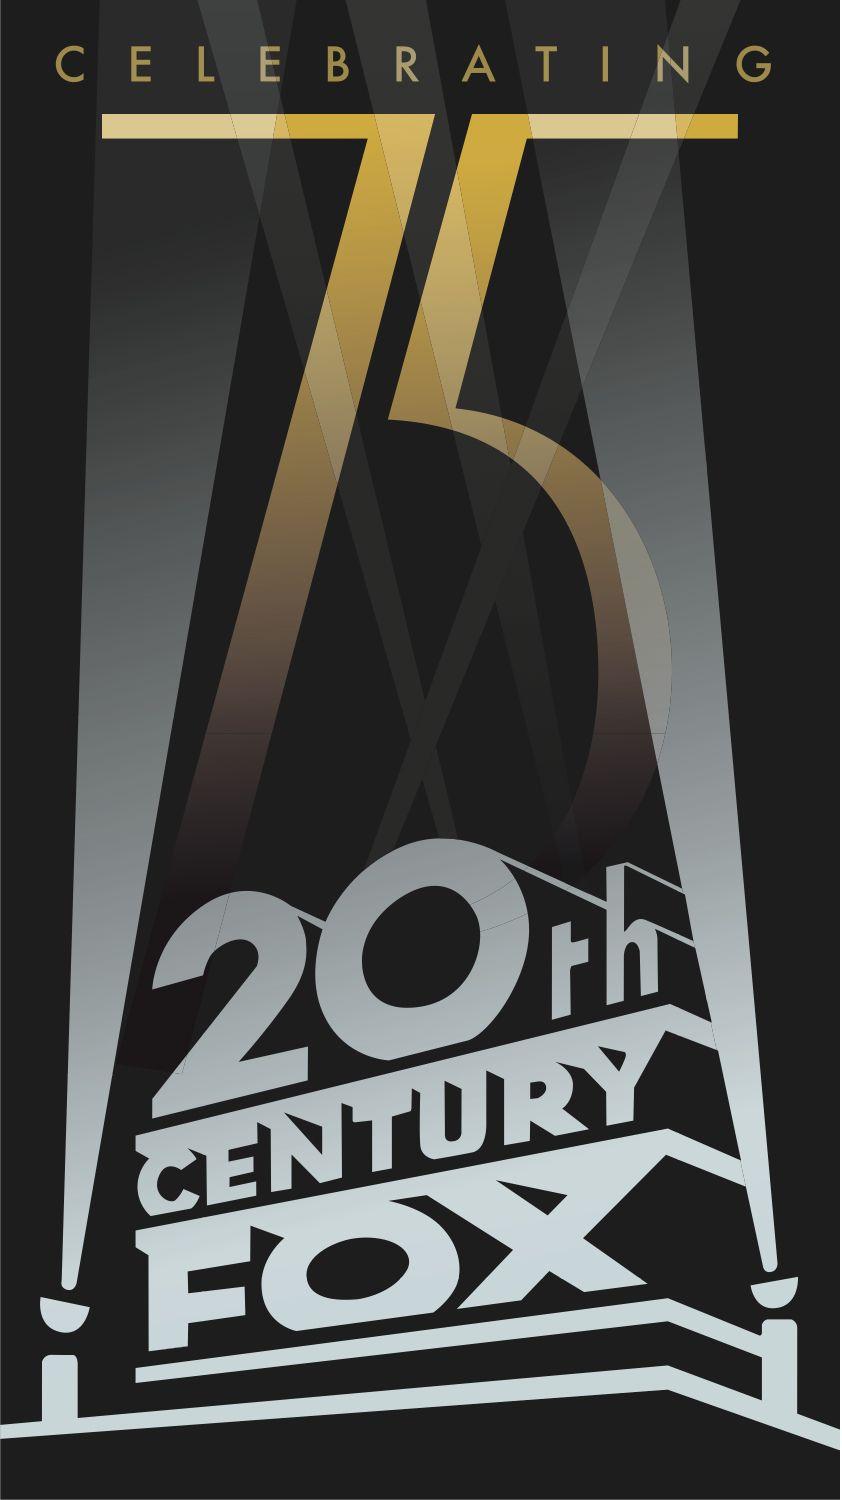 20th Century Fox DVD Logo - 20th Century Fox Releasing 75 Film Box Set To Honor 75th Anniversary